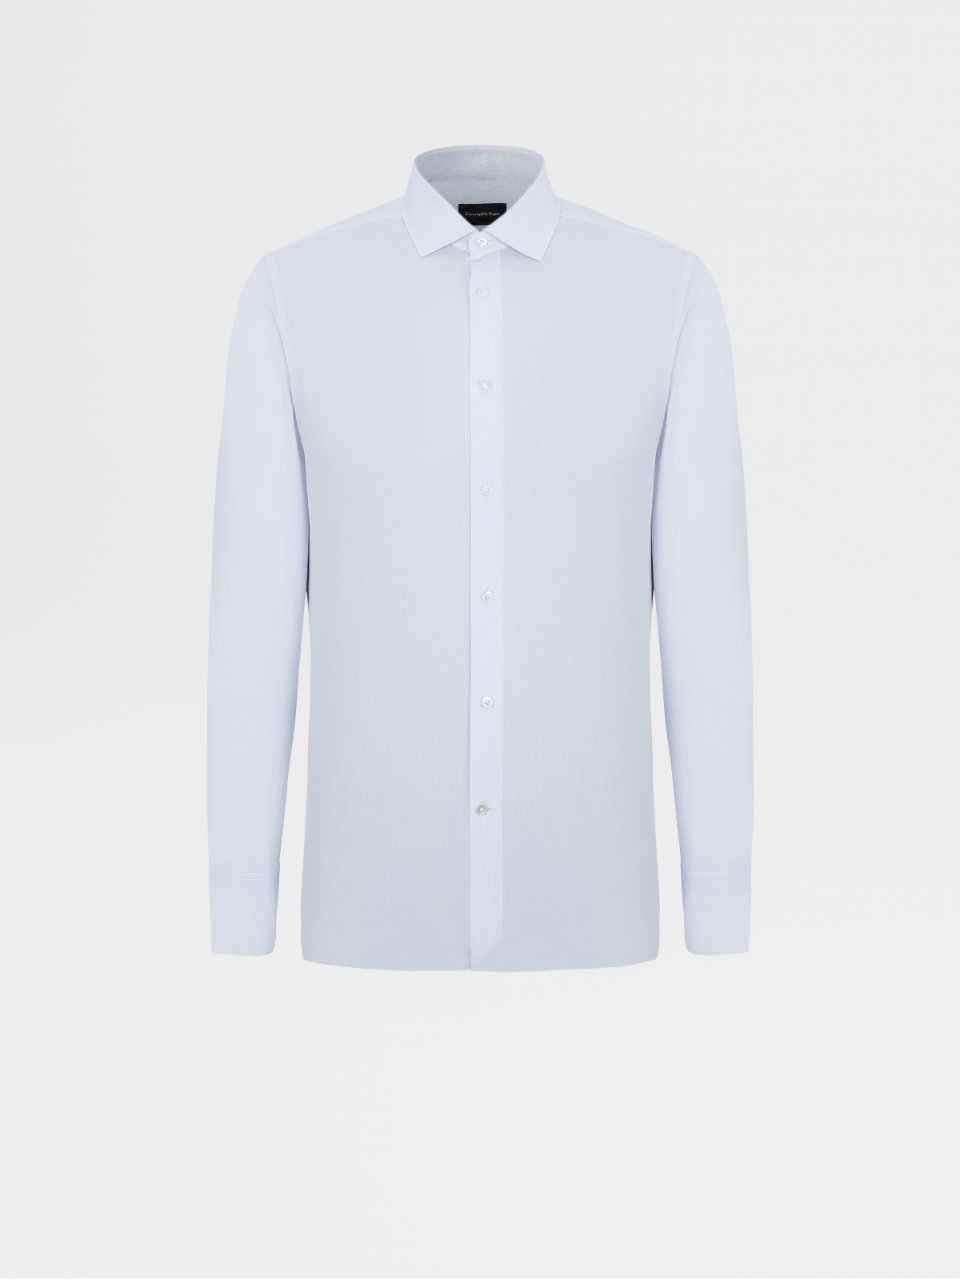 Micro-striped Light Blue 100fili Cotton Tailoring Shirt, Milano Regular Fit